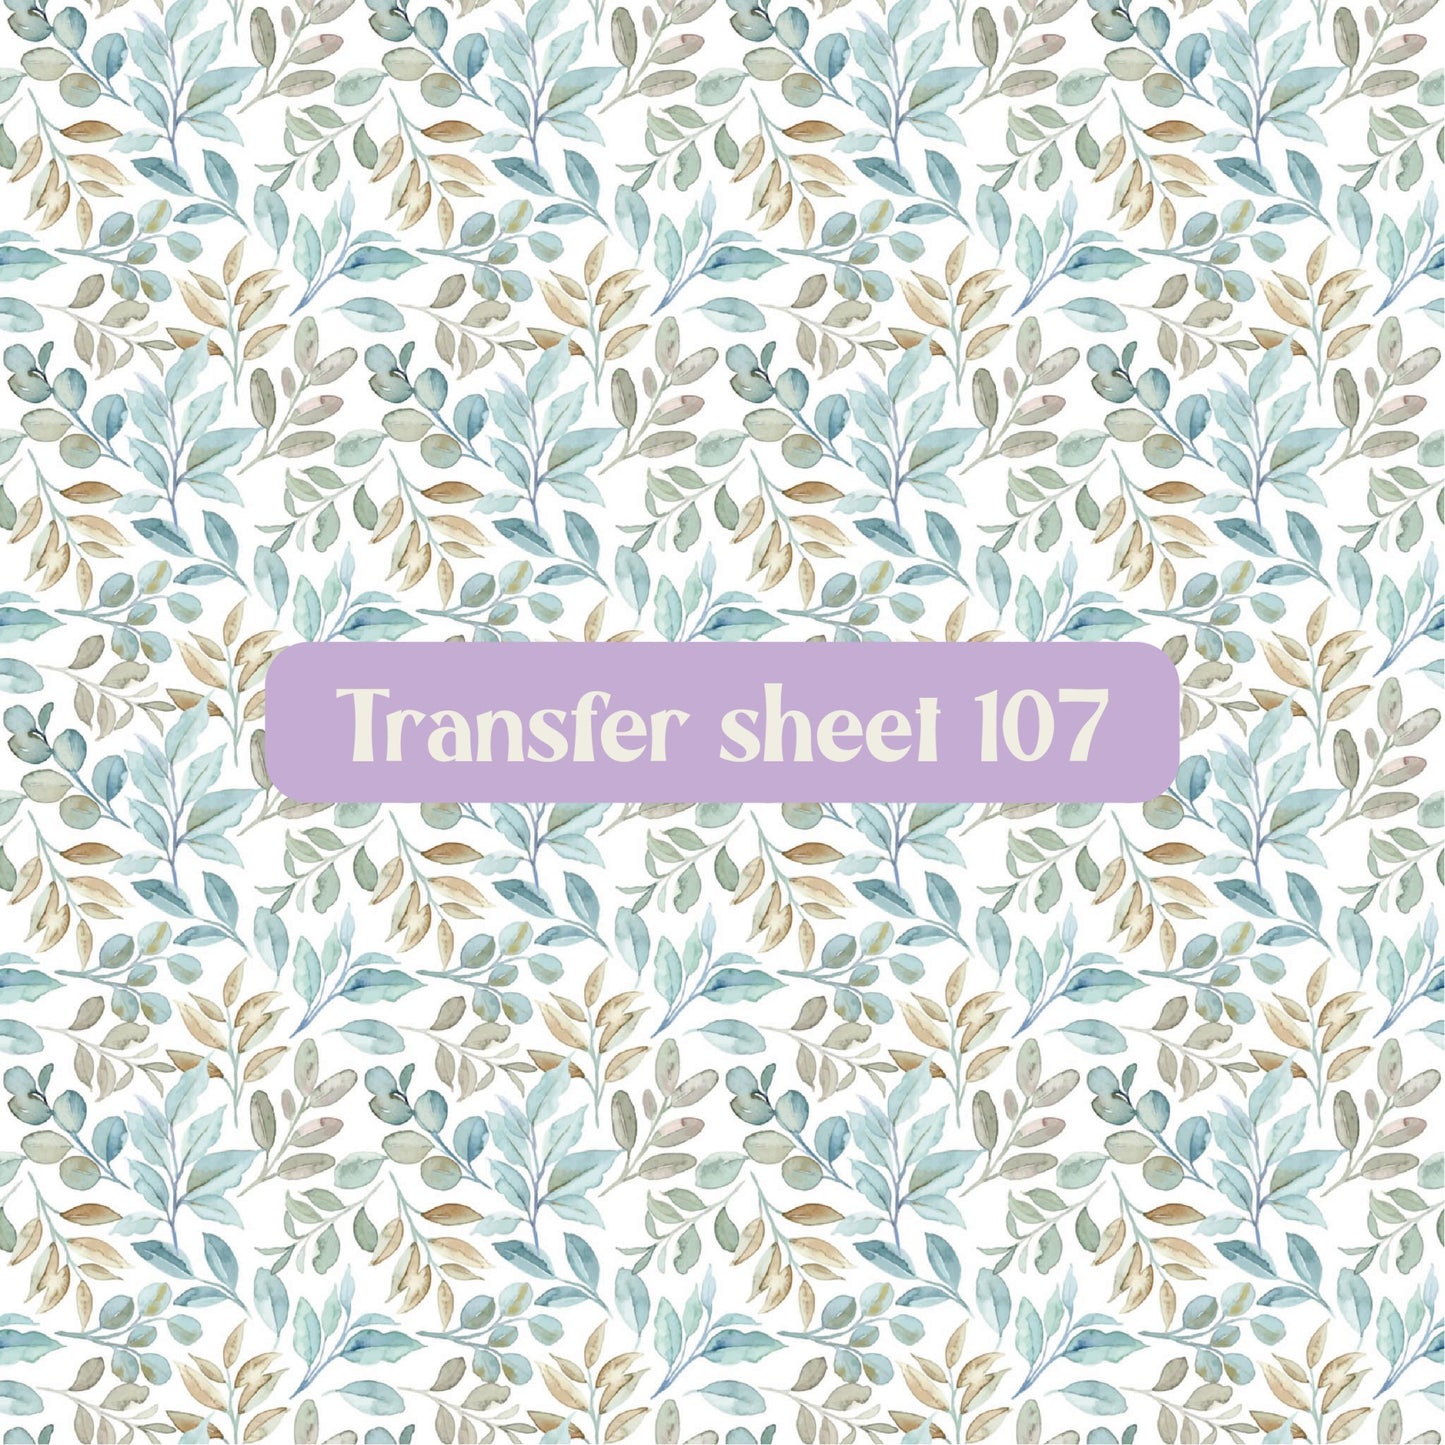 Transfer sheet 107 - Transfer paper - CLN Atelier